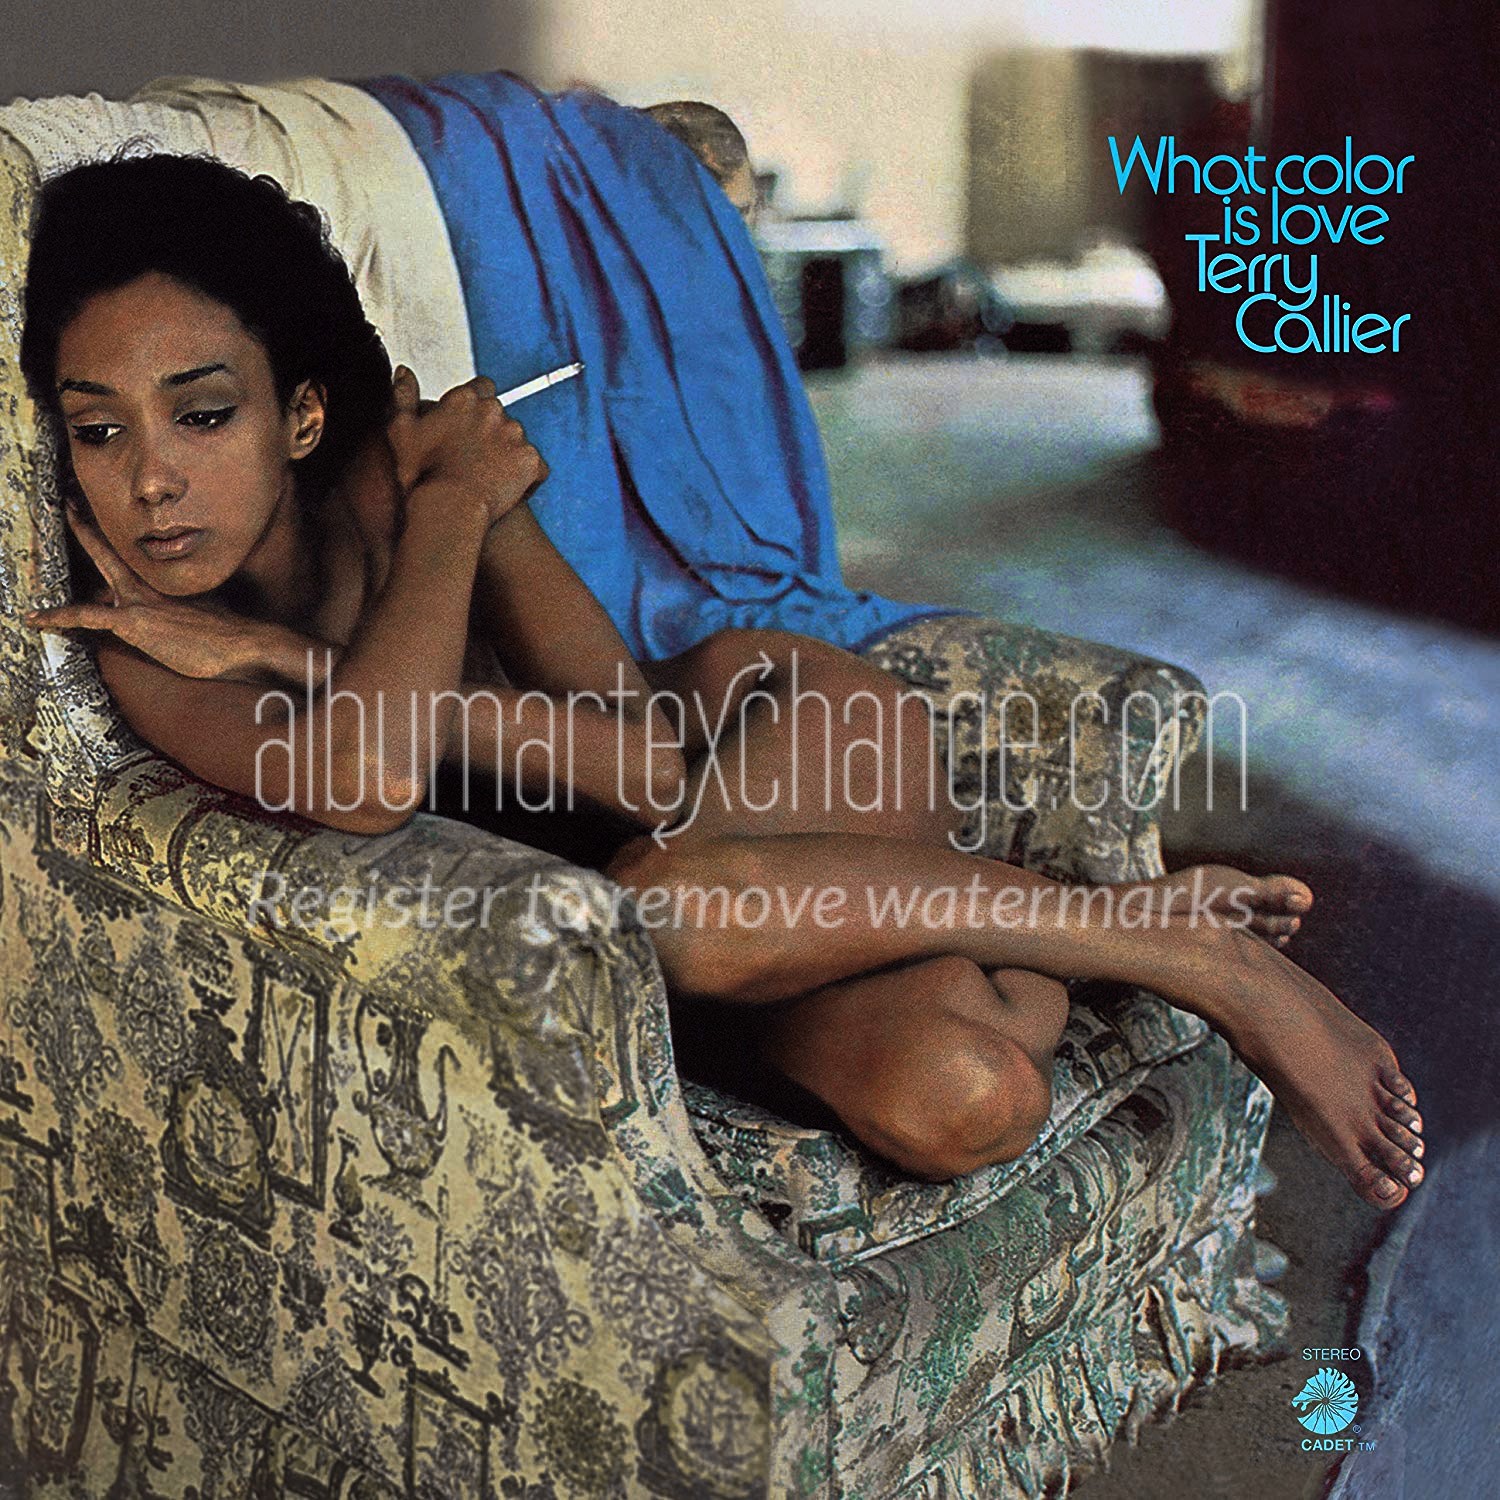 Album Art Exchange - What Color is Love by Terry Callier - Album 